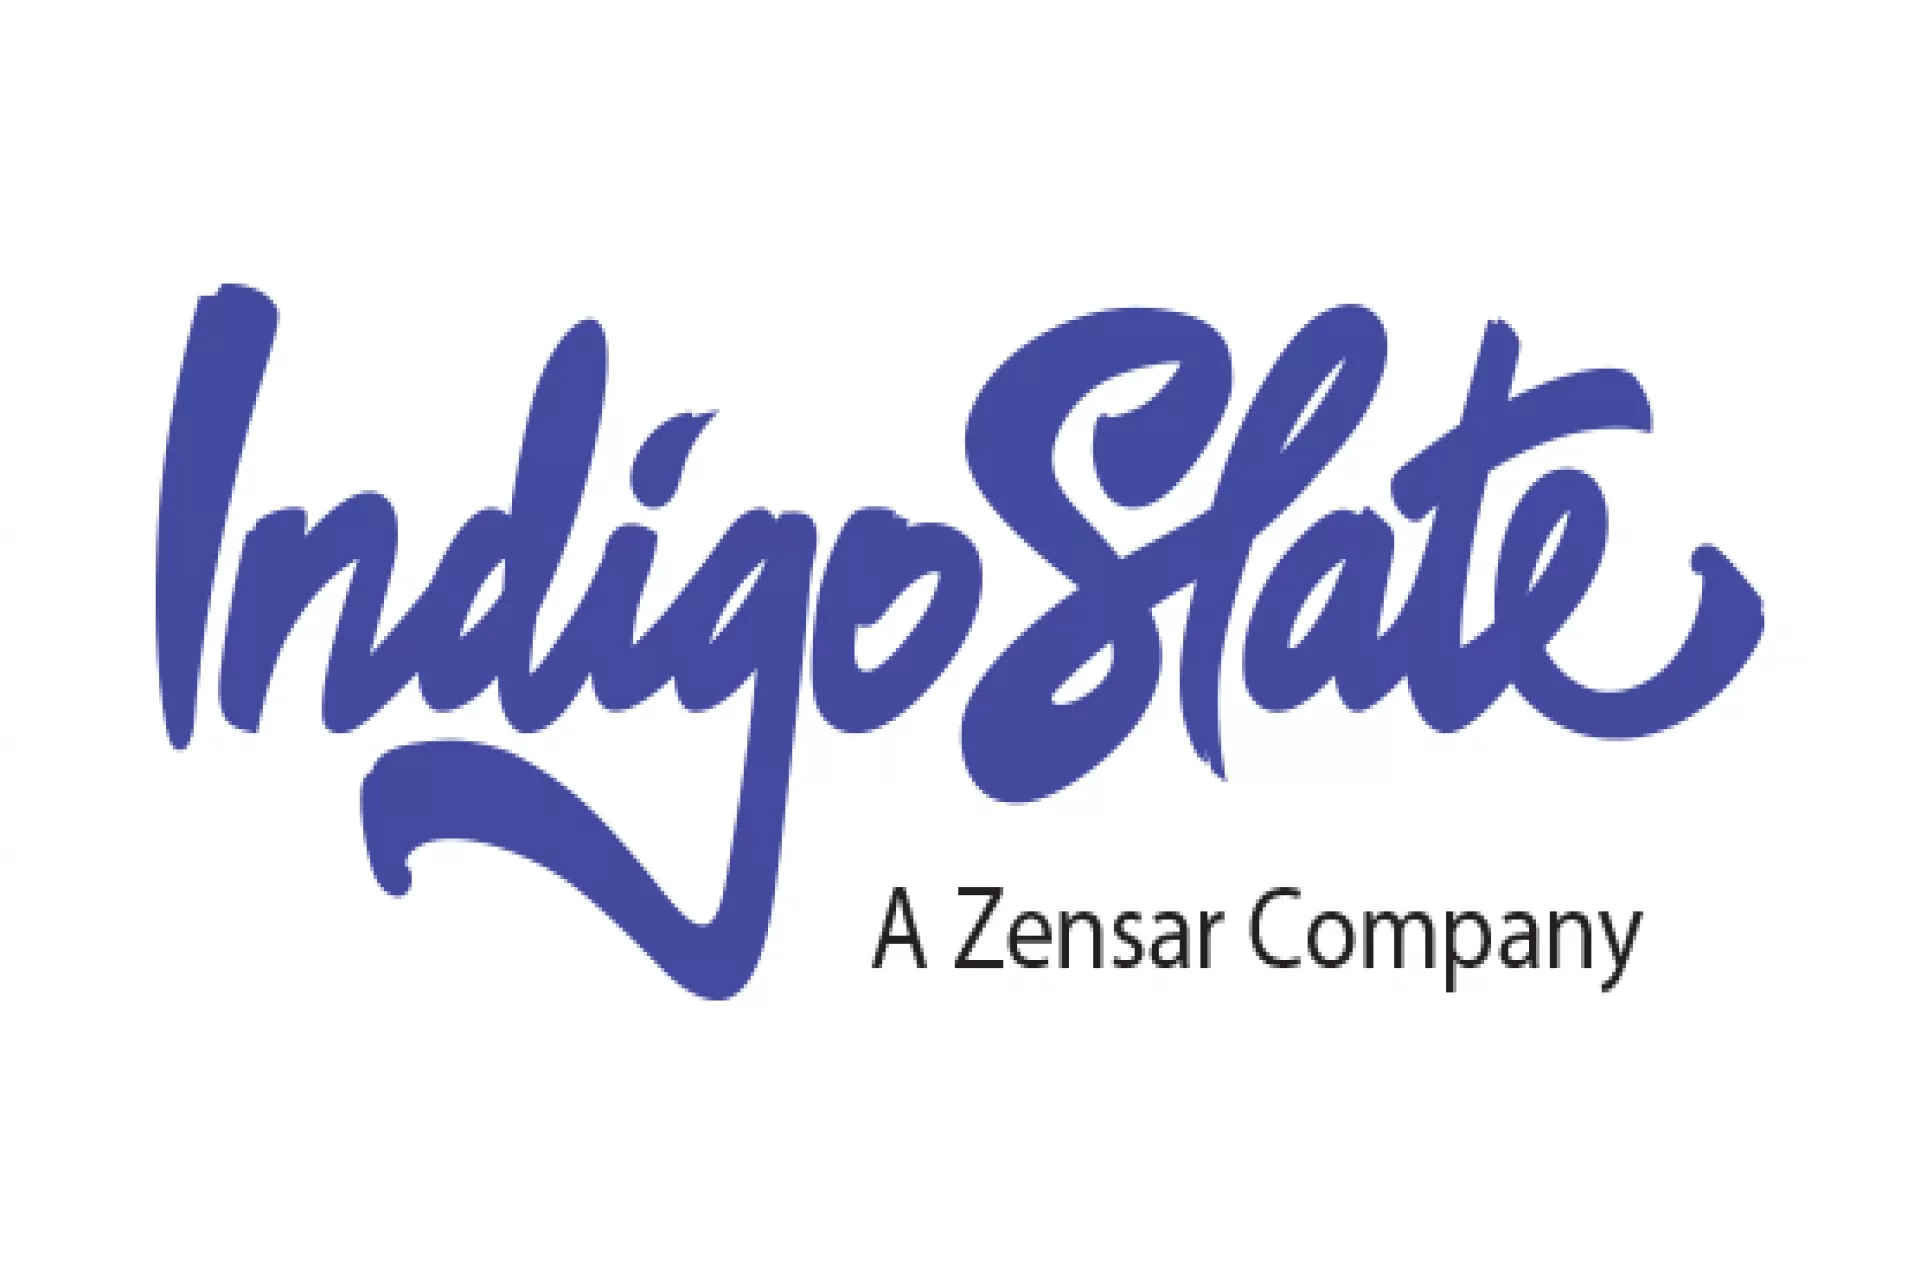 Zensar acquires Indigo Slate, a US based Digital Agency